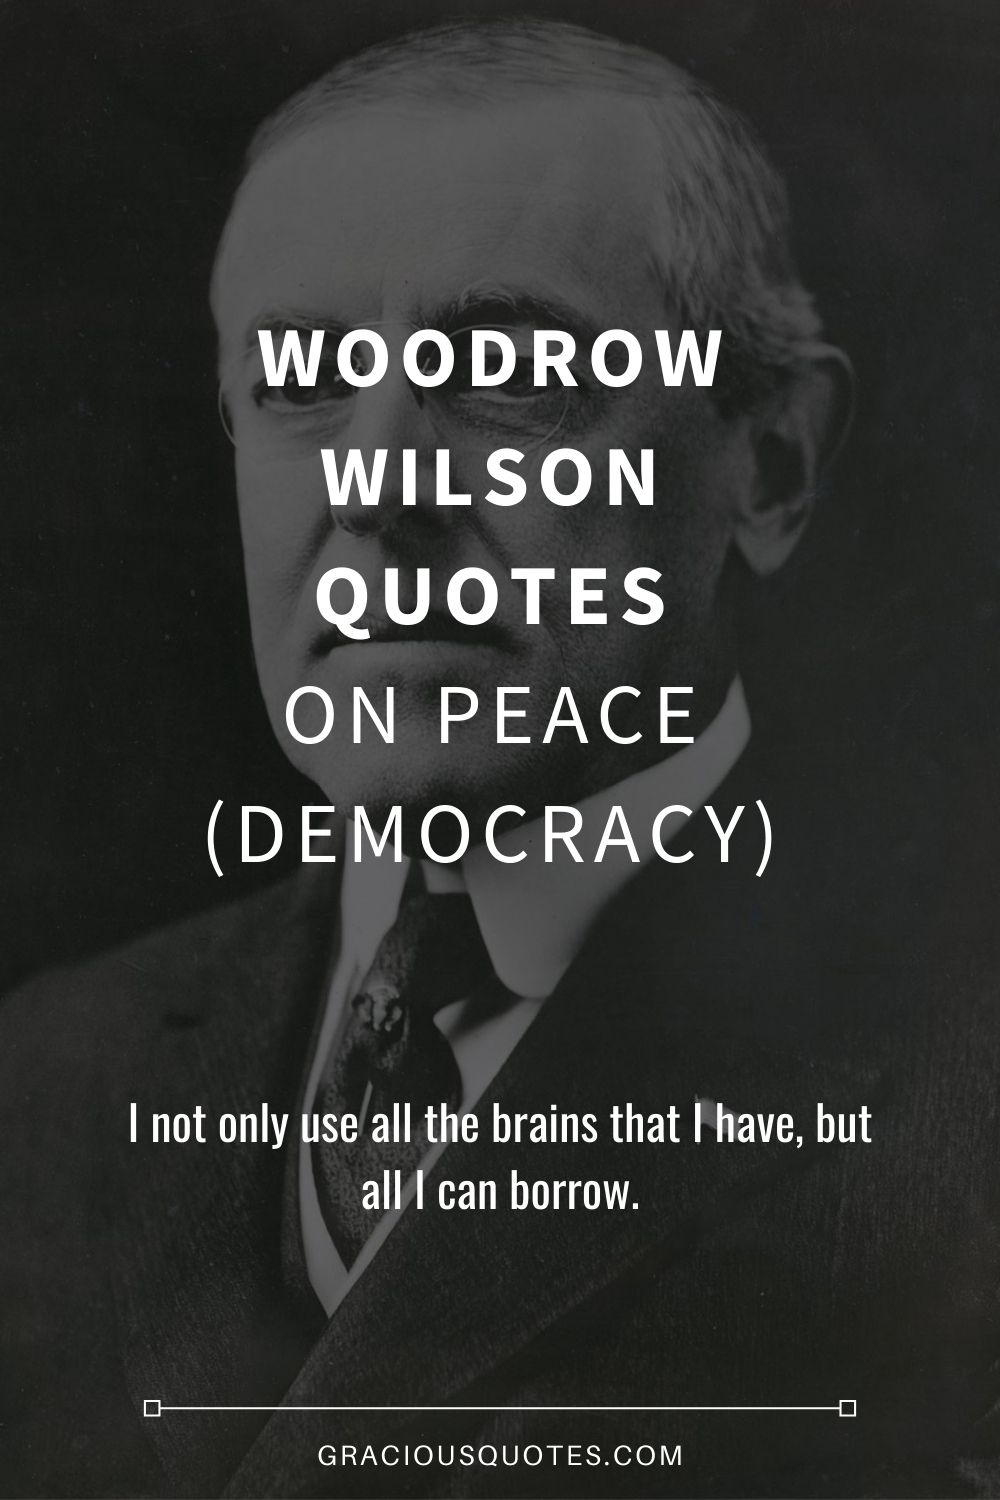 Woodrow Wilson Quotes on Peace (DEMOCRACY) - Gracious Quotes